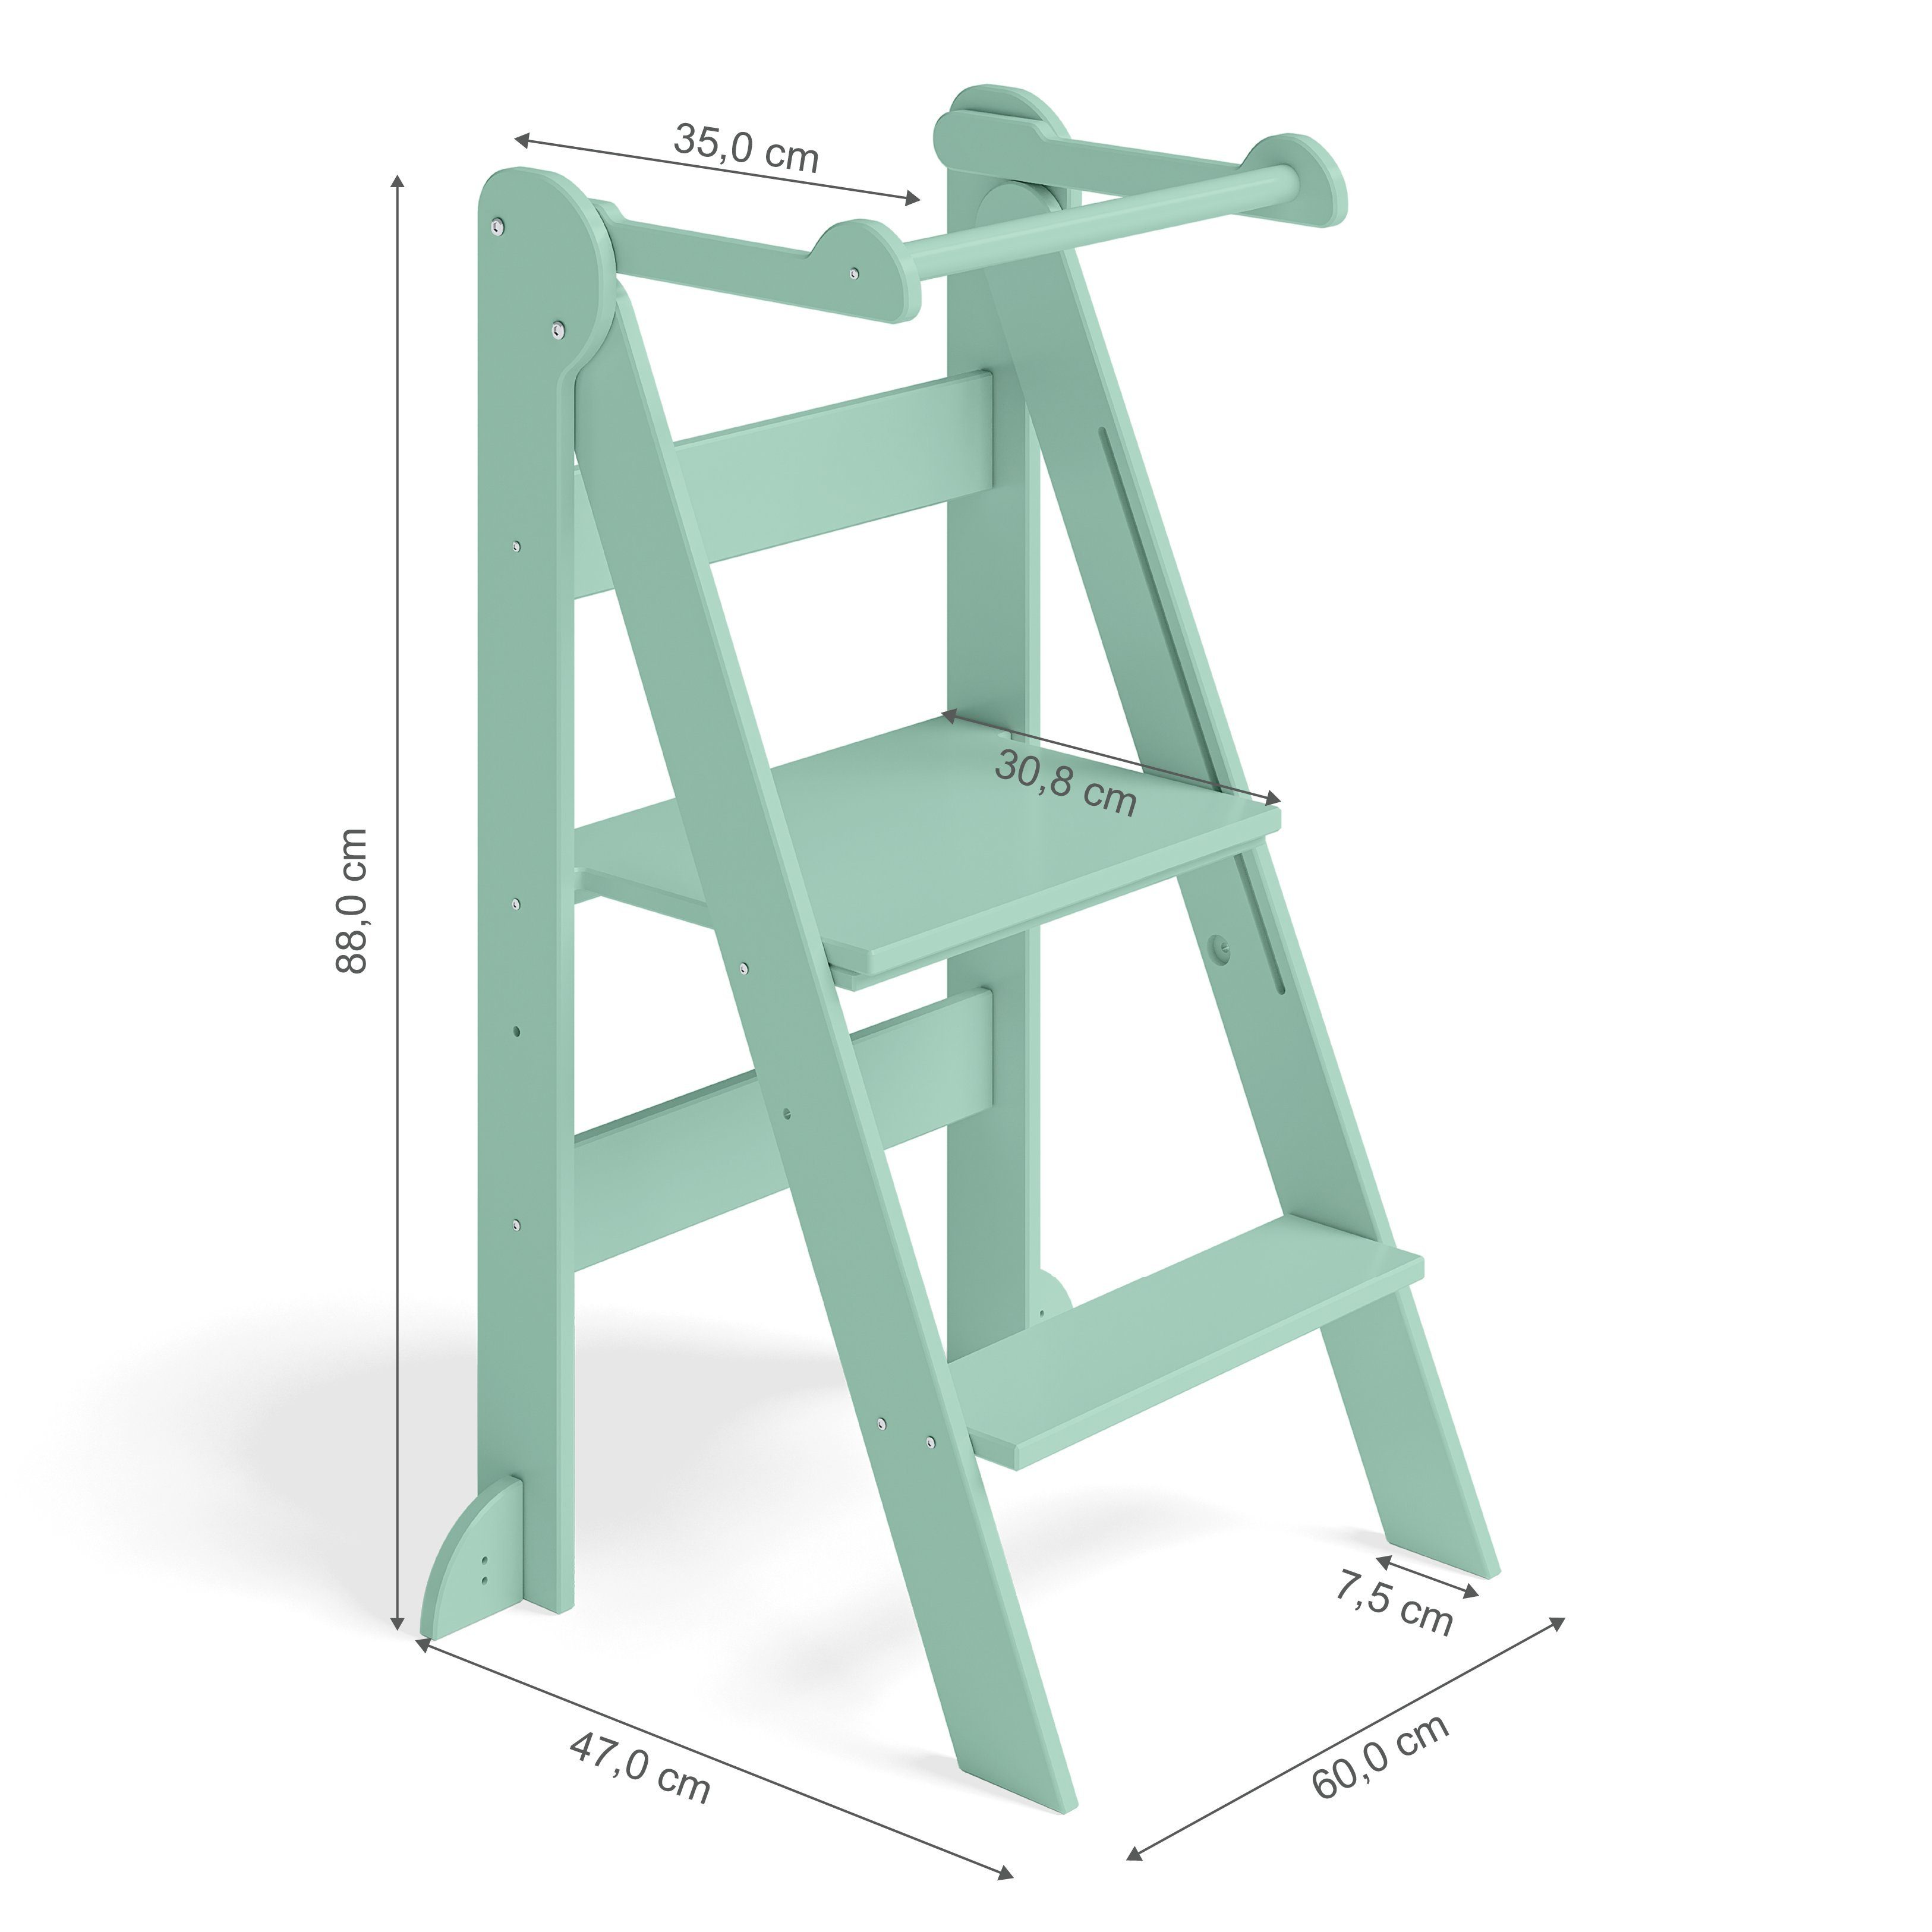 Bellabino Stehhilfe Tay (Lernturm), zusammenklappbar, | mintgrün mintgrün 2-fach höhenverstellbar, mintgrün